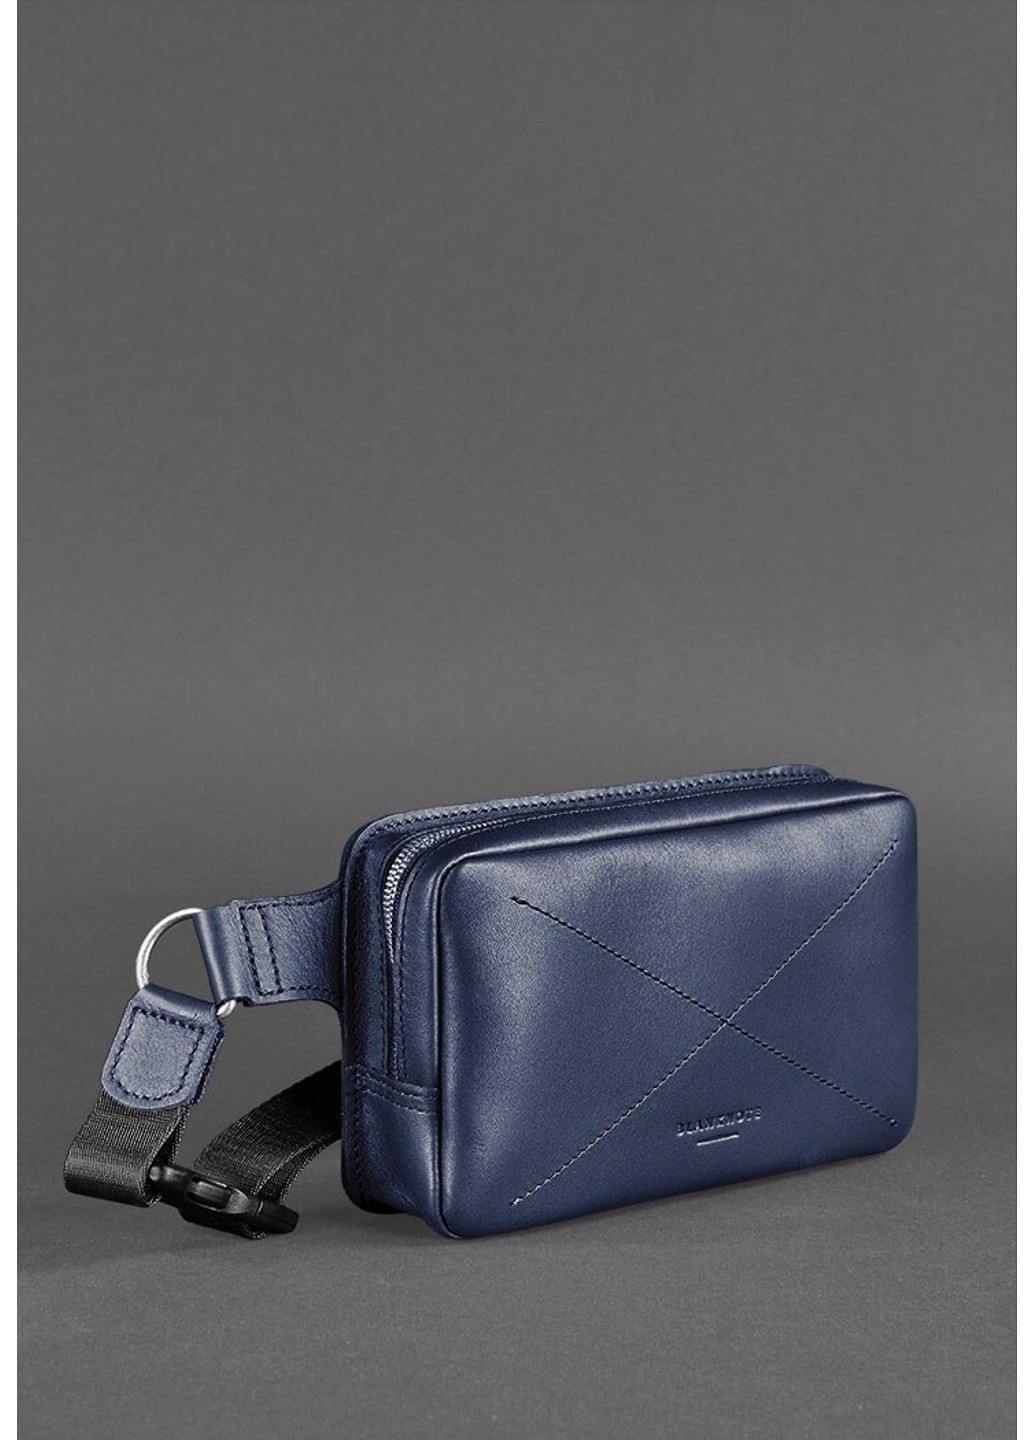 Шкіряна поясна сумка Dropbag Mini темно-синя bn-bag-6-navy-blue BlankNote (264478310)